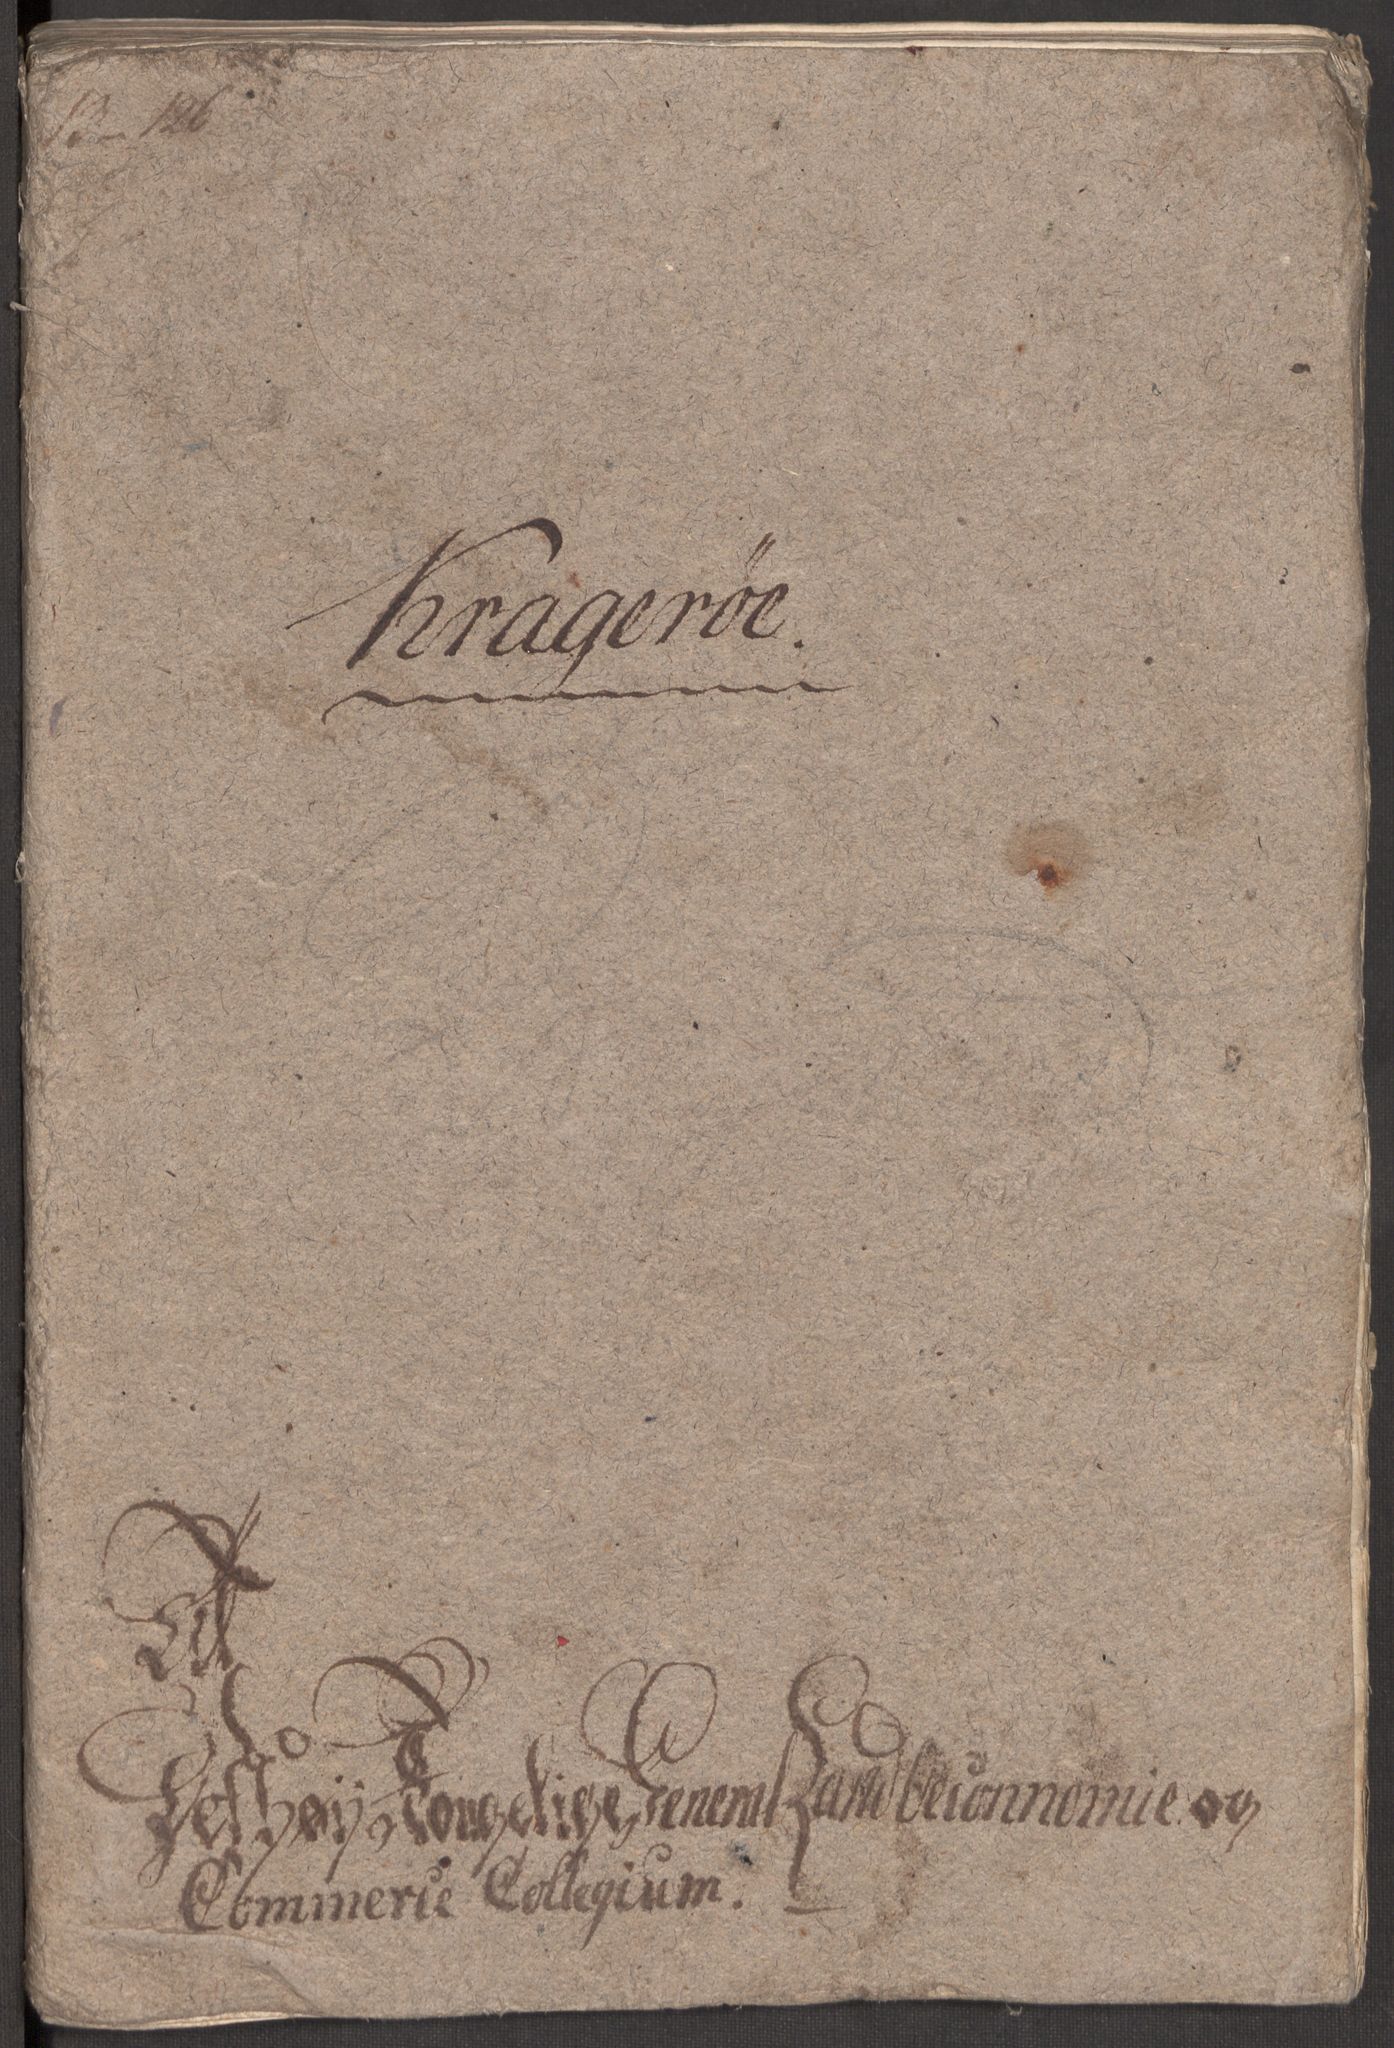 Kommersekollegiet, Brannforsikringskontoret 1767-1814, RA/EA-5458/F/Fa/L0032/0005: Kragerø / Branntakstprotokoll, 1797